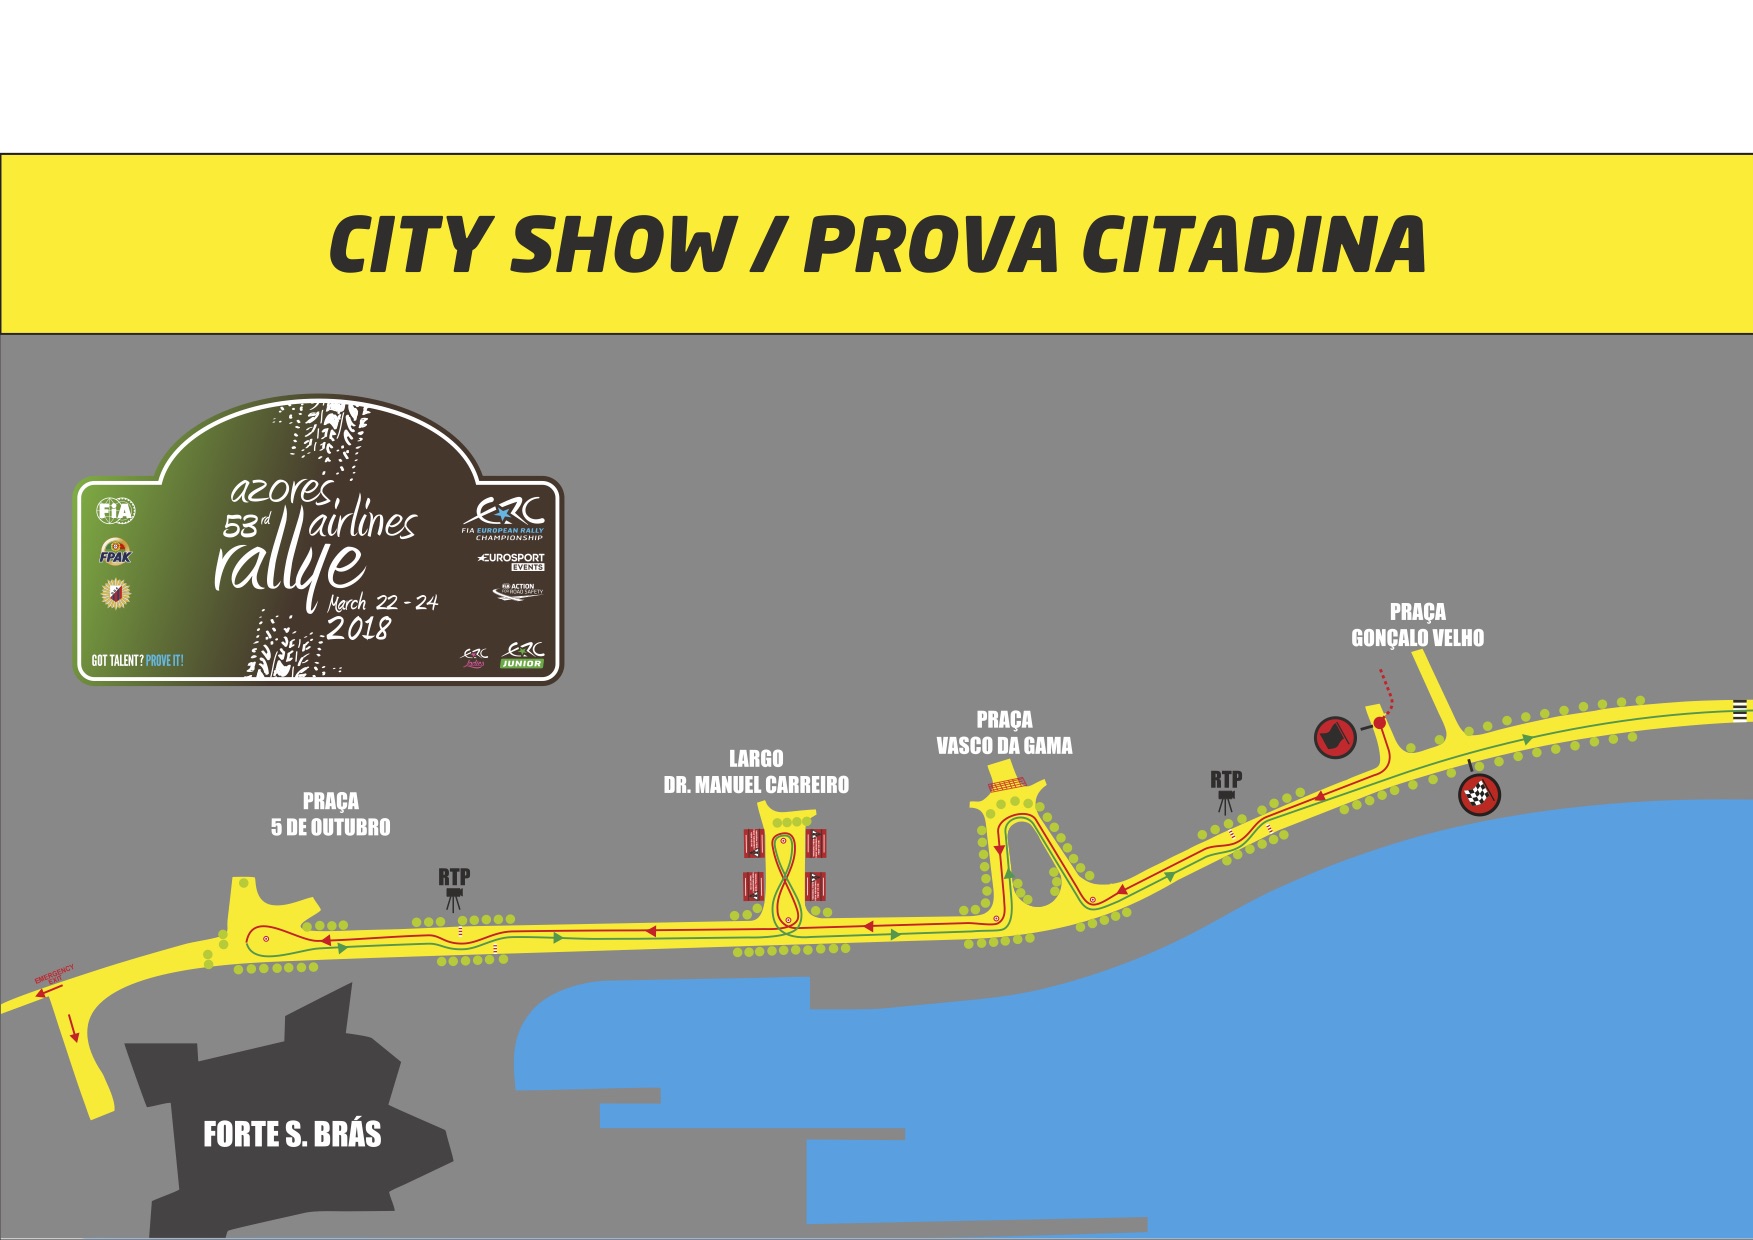 Mapa-City-Show-Troco-Azores-Airlines-Rallye